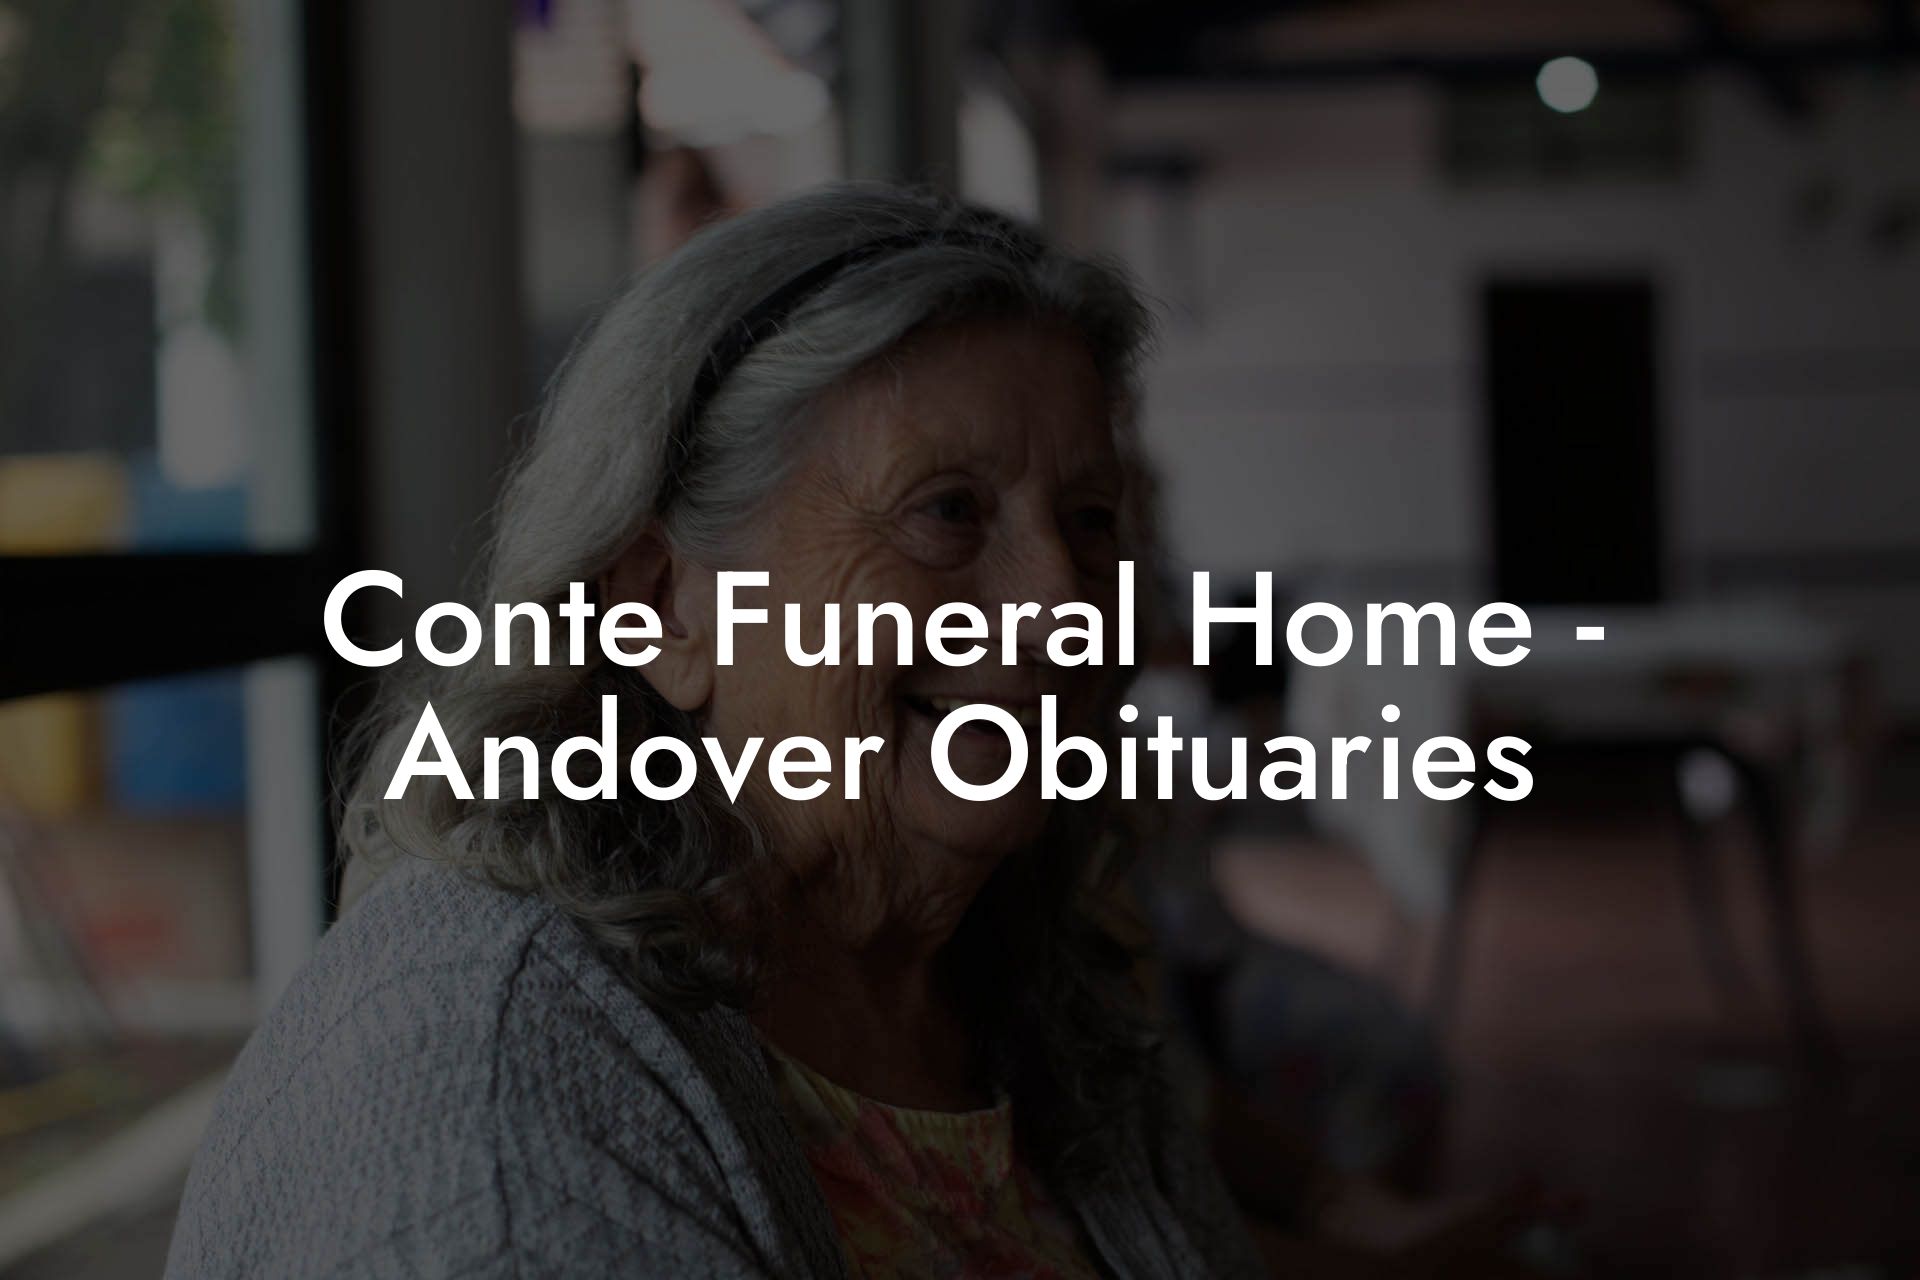 Conte Funeral Home - Andover Obituaries